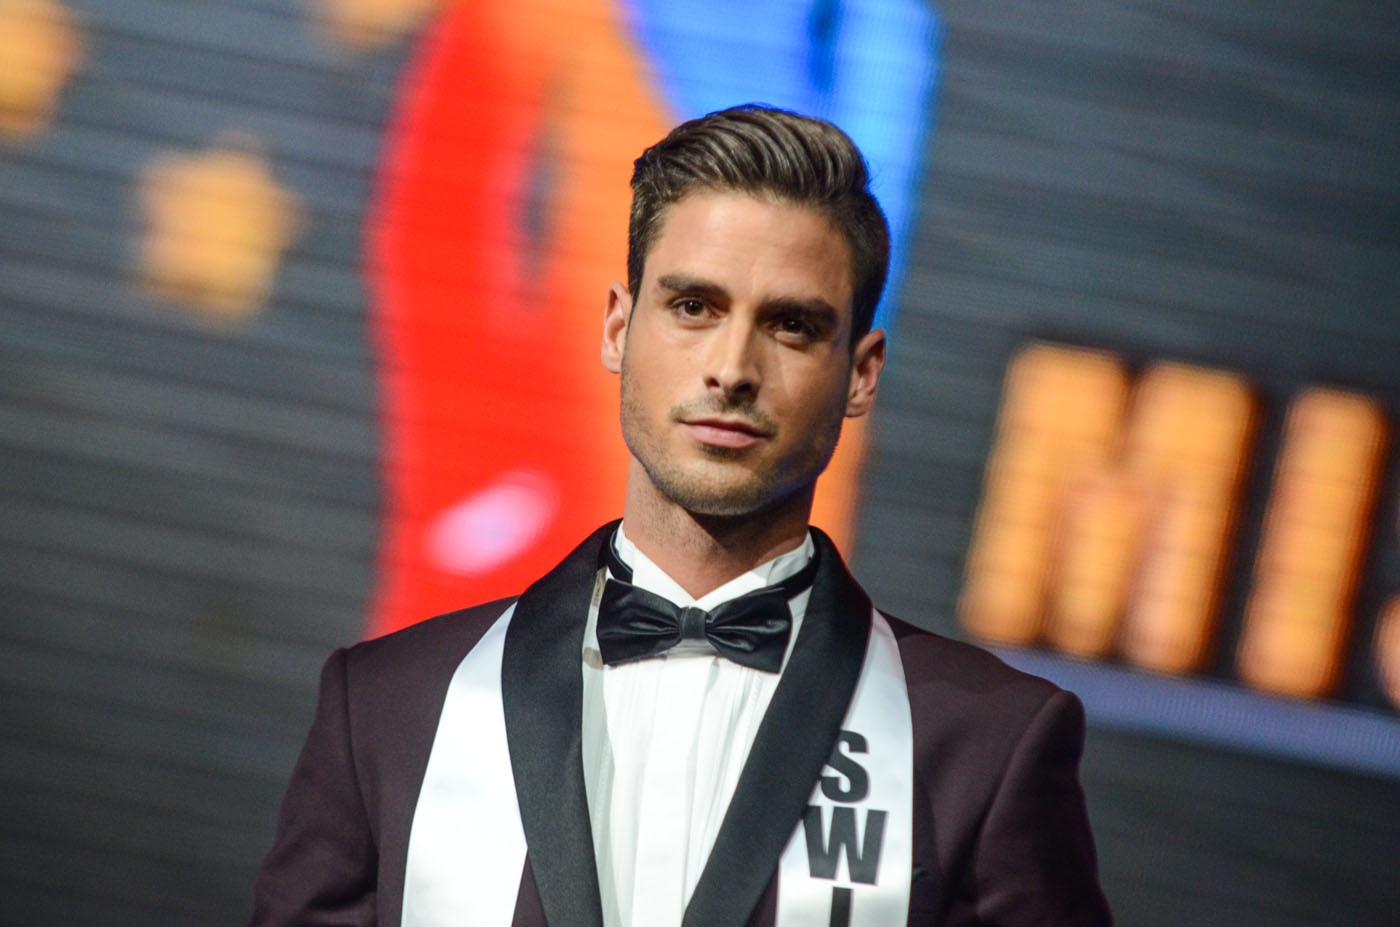 Switzerland's Pedro Mendes wins Mister International 2015 pageant